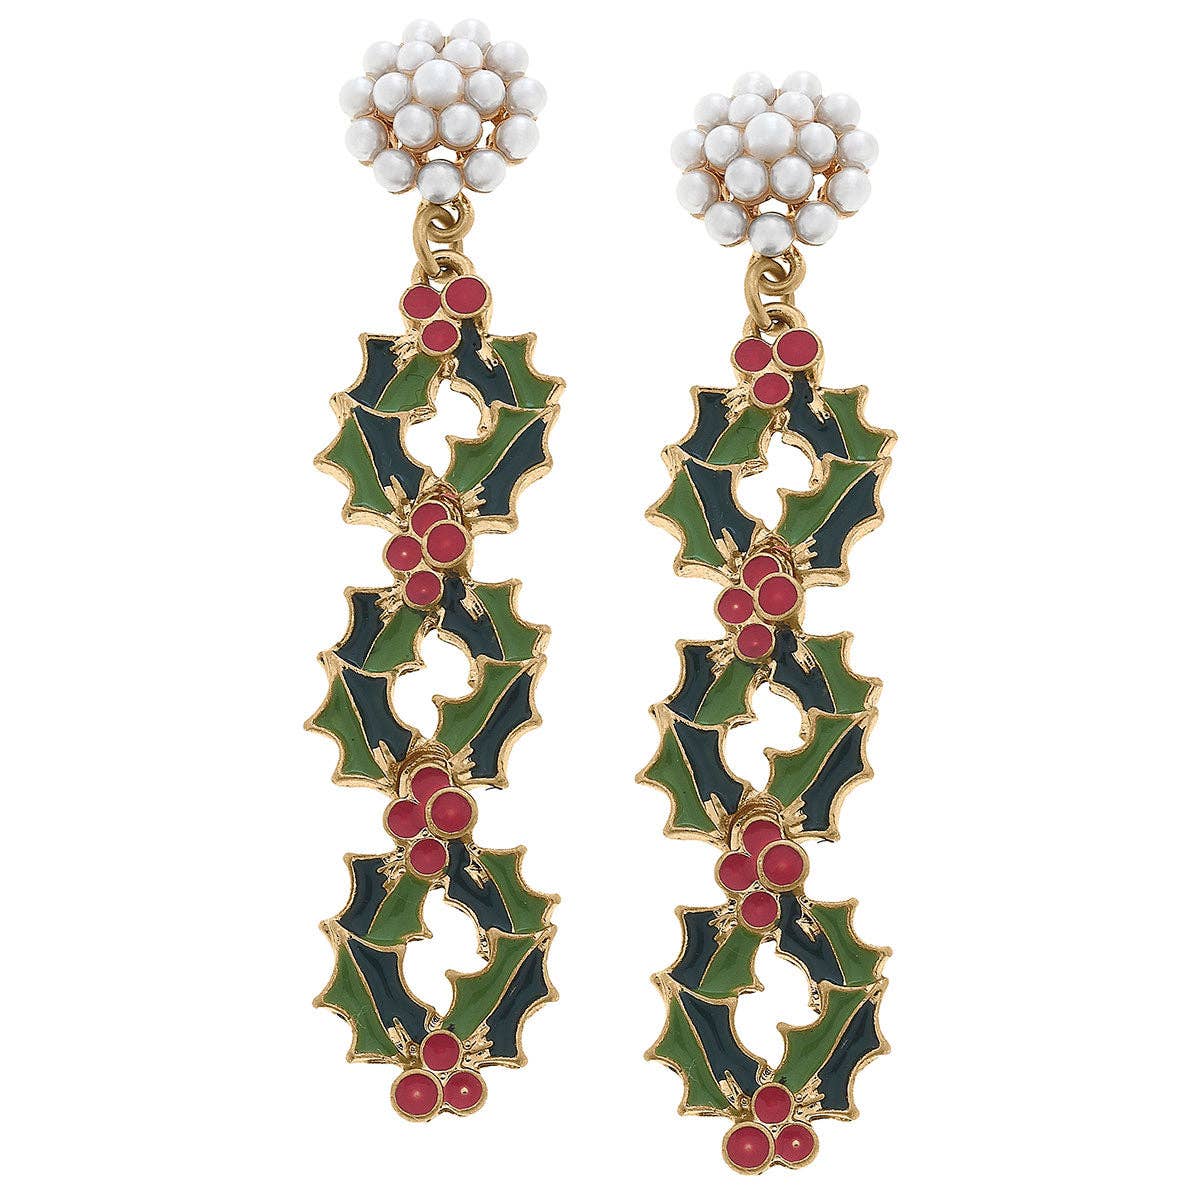 Linked Holly Enamel Drop Earrings in Green & Fuchsia - Pretty Crafty Lady Shop